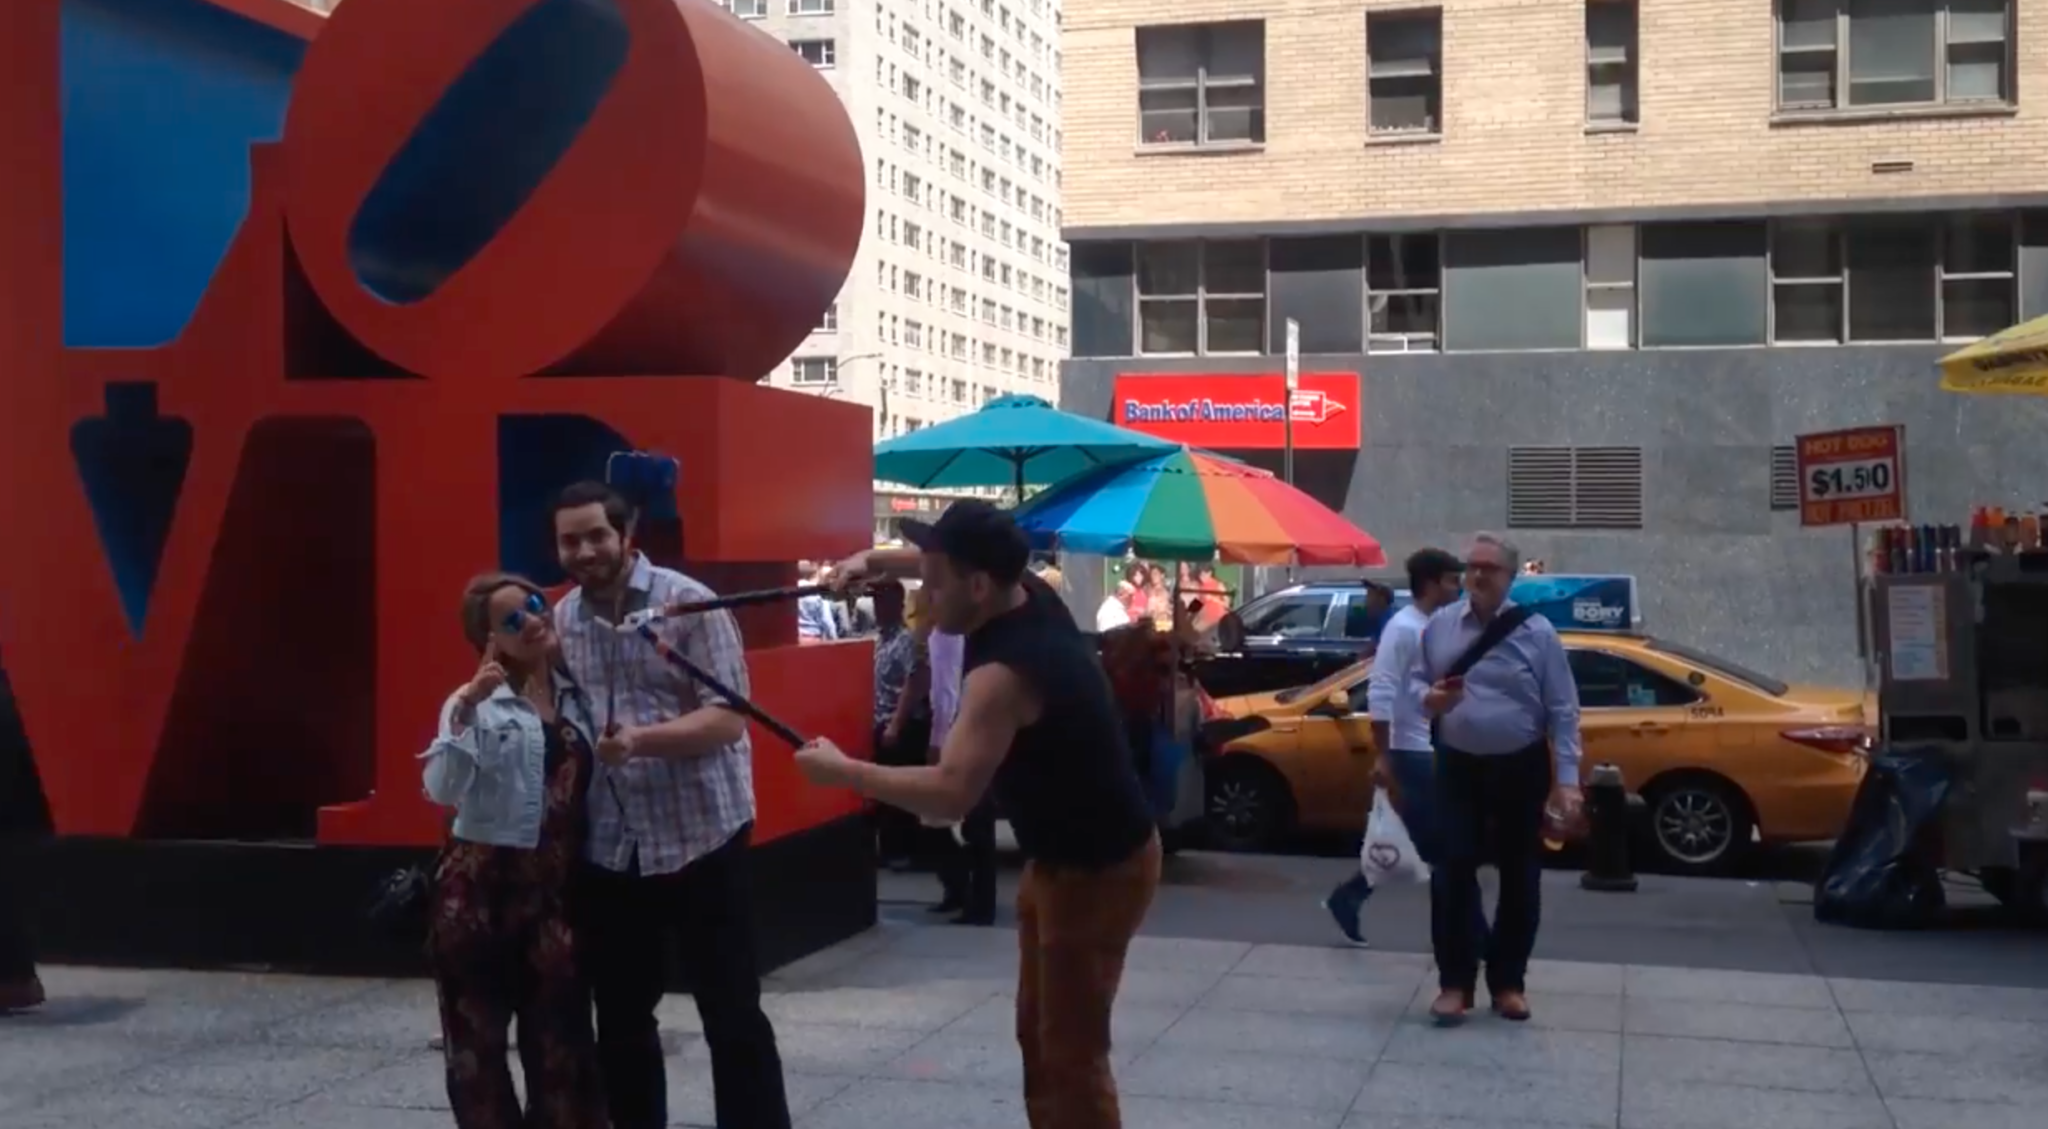 Unmasked Vigilante Patrols NYC Snipping Tourists’ Selfie Sticks